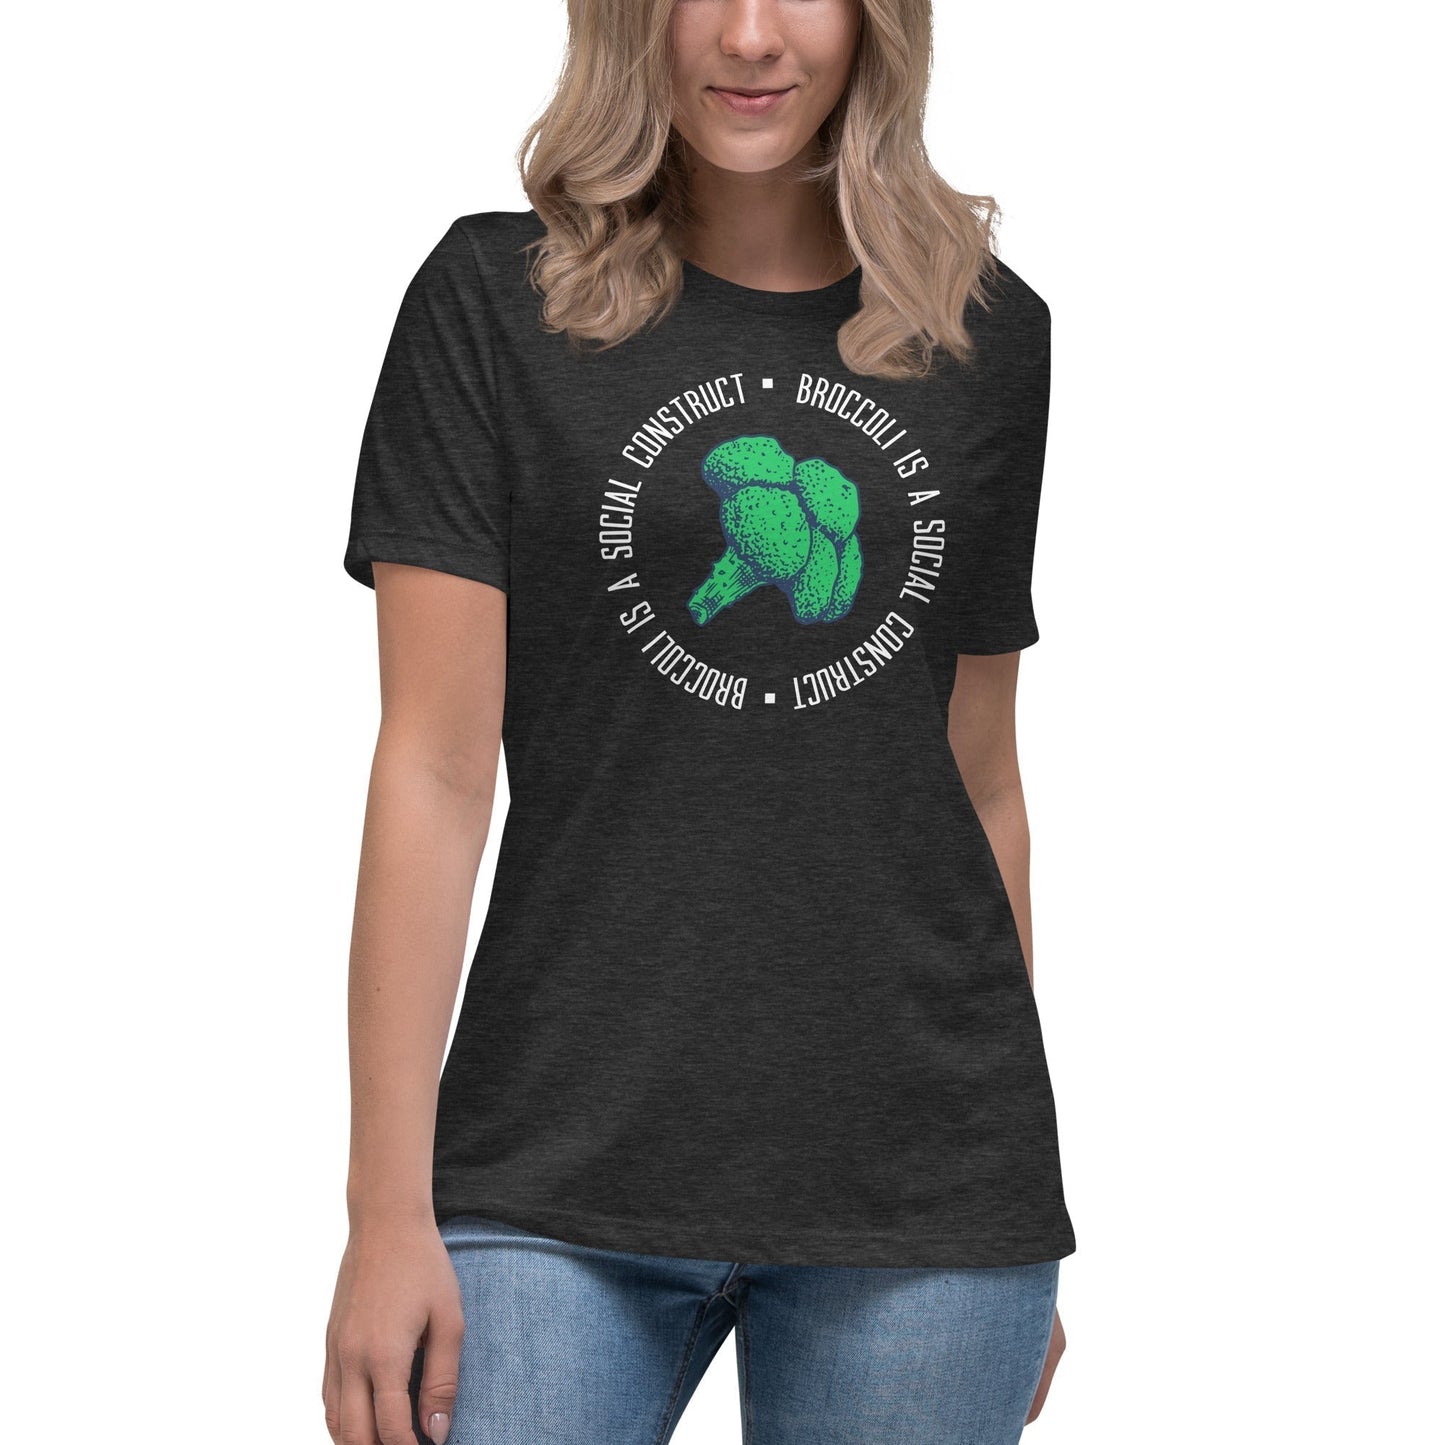 Broccoli is a social construct - Women's T-Shirt